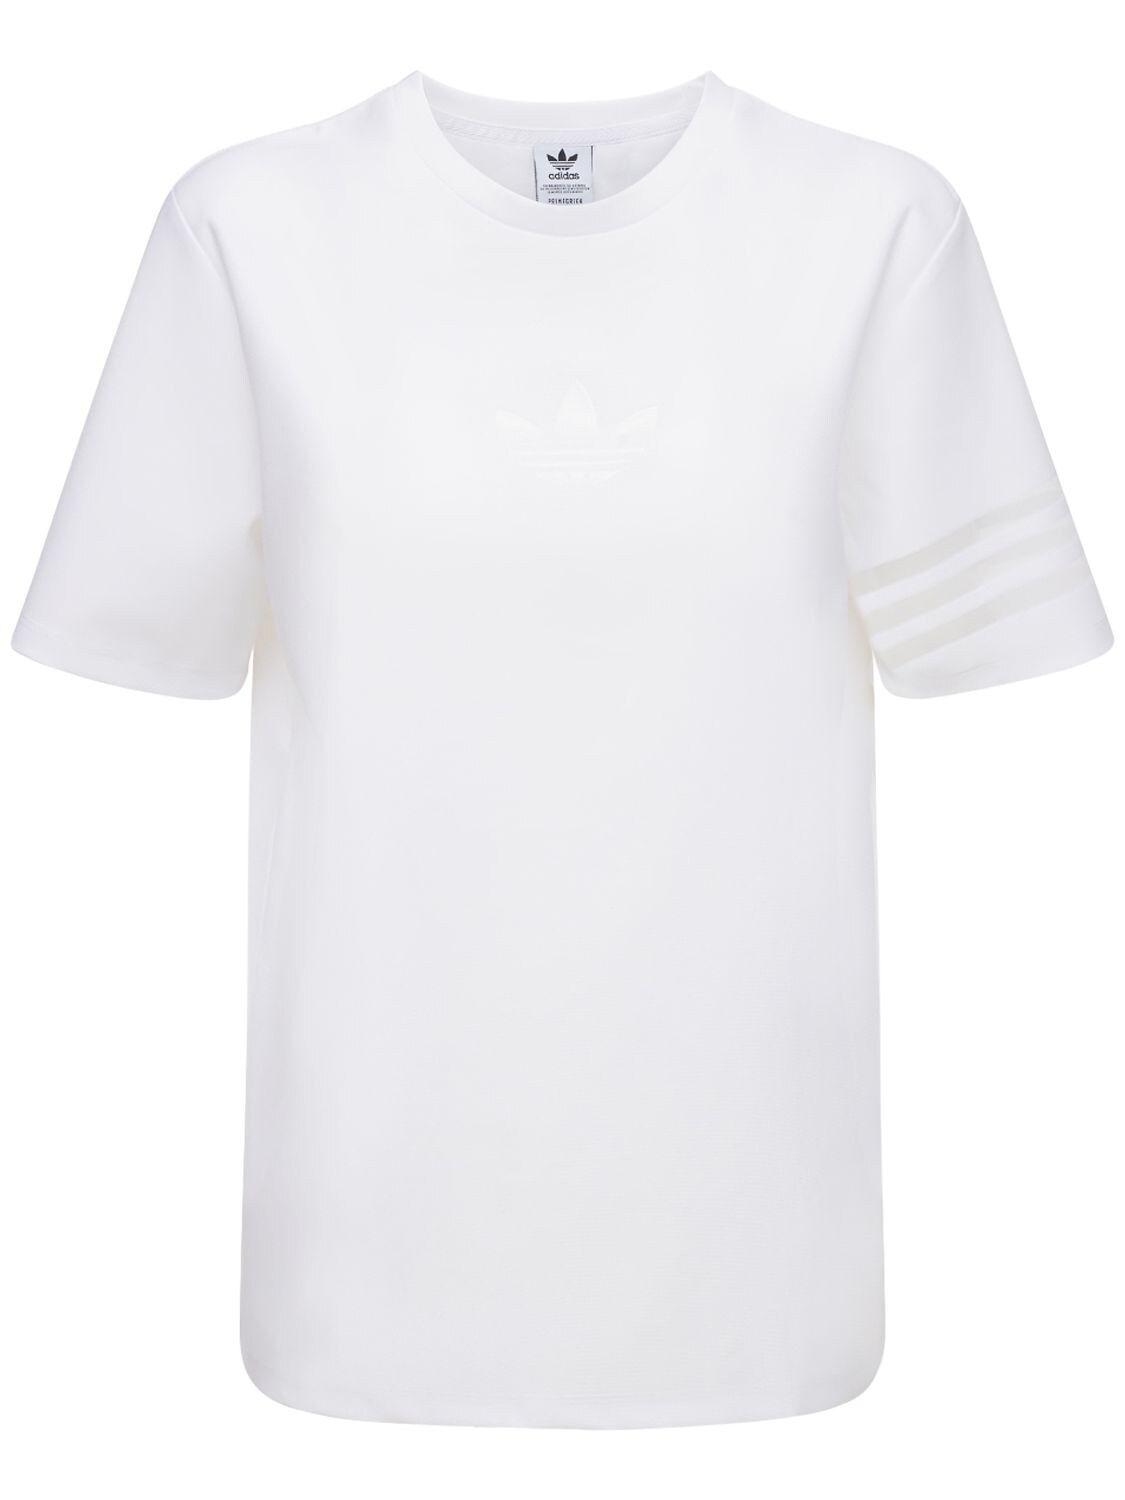 Adidas Originals Logo T-shirt In White